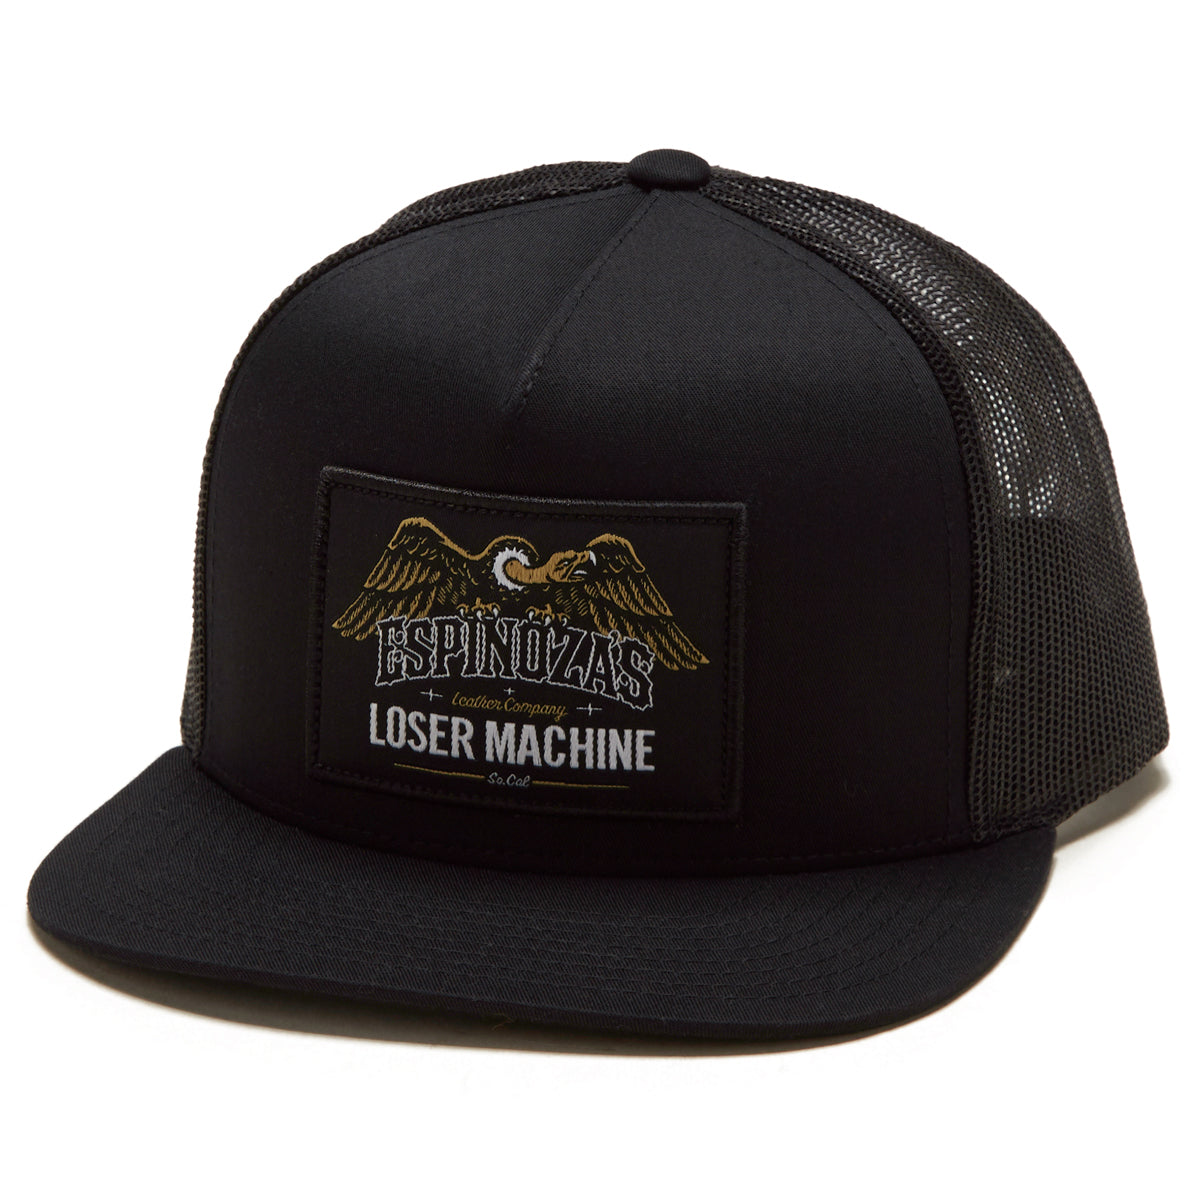 Loser Machine x Espinozas Trucker Hat - Black image 1